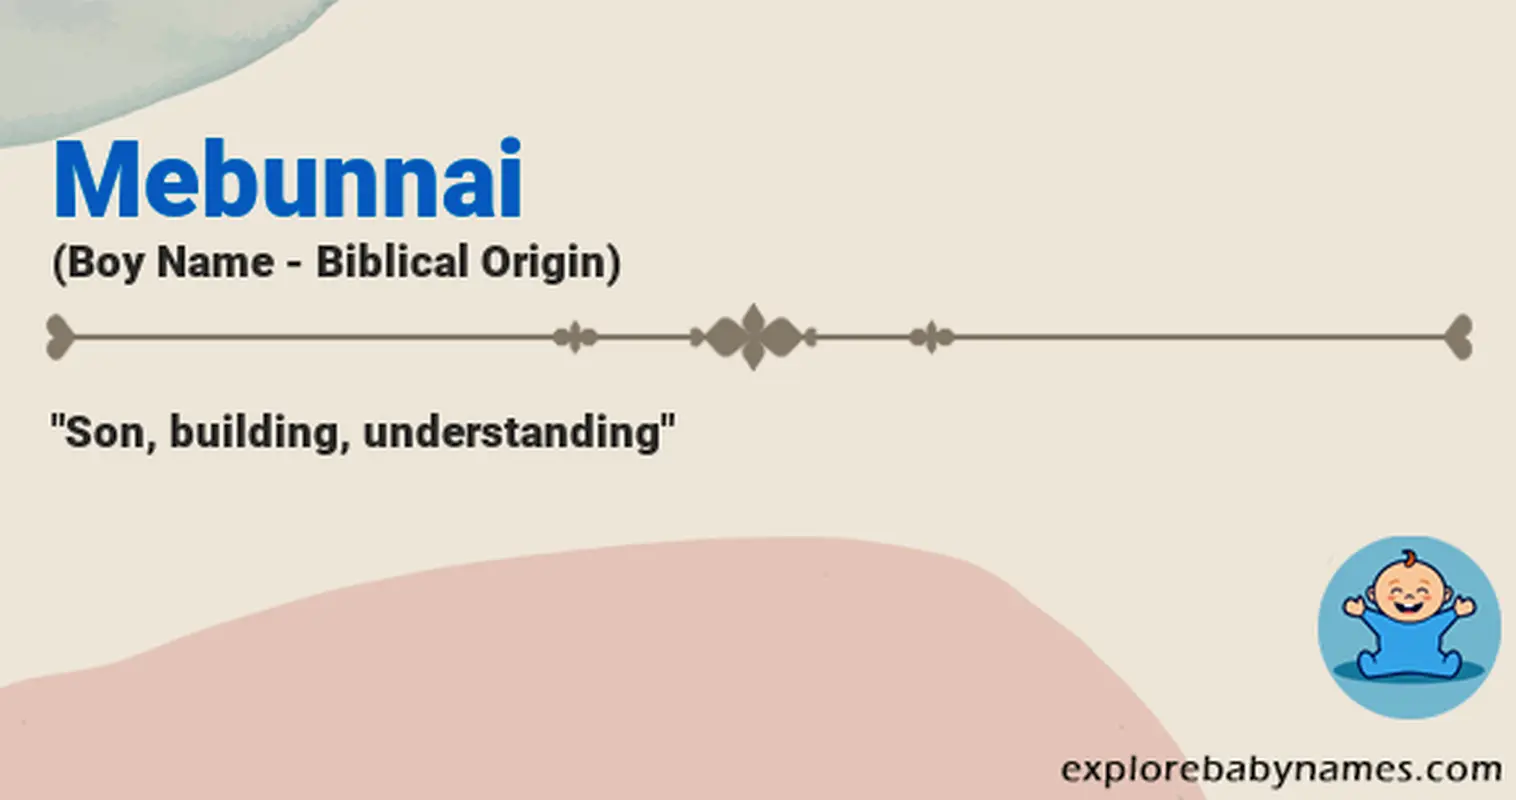 Meaning of Mebunnai